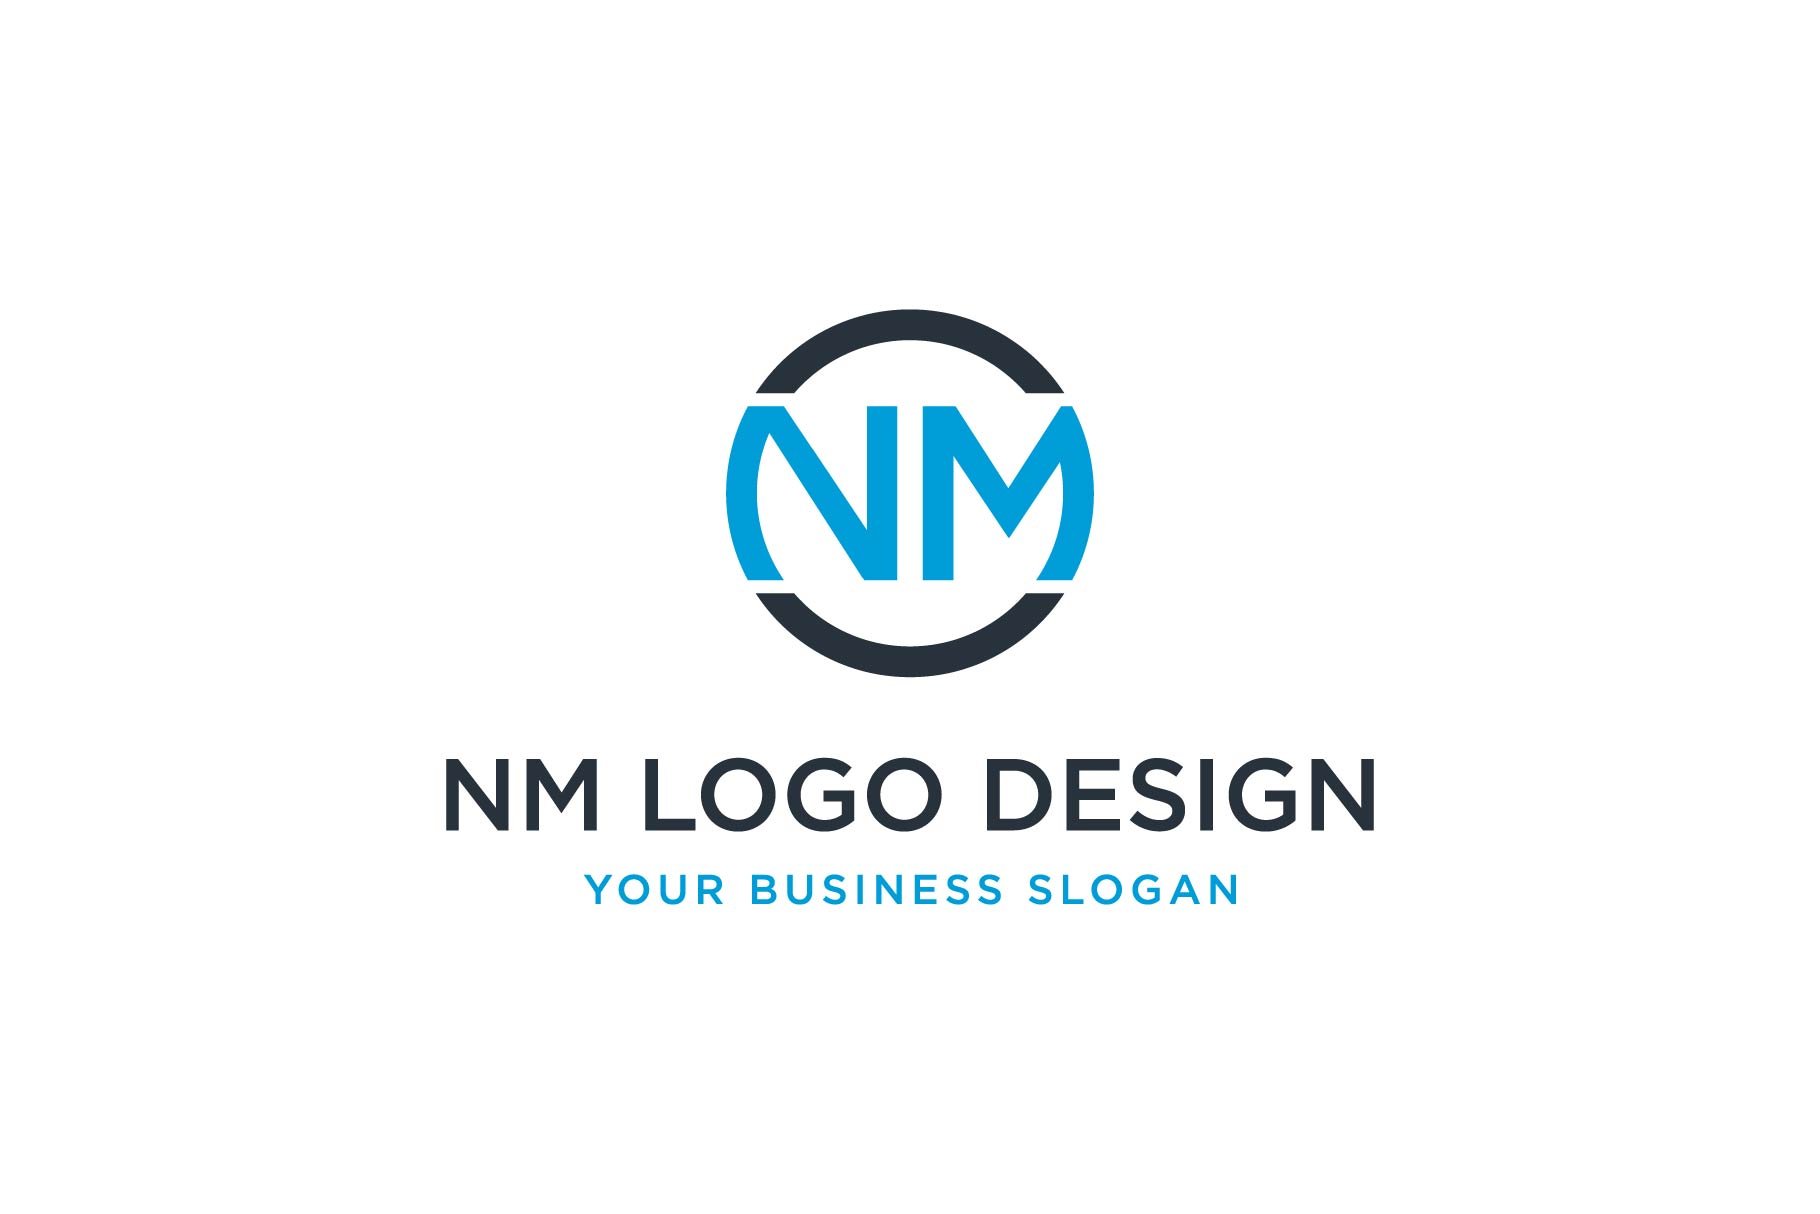 NM Logo Design cover image.